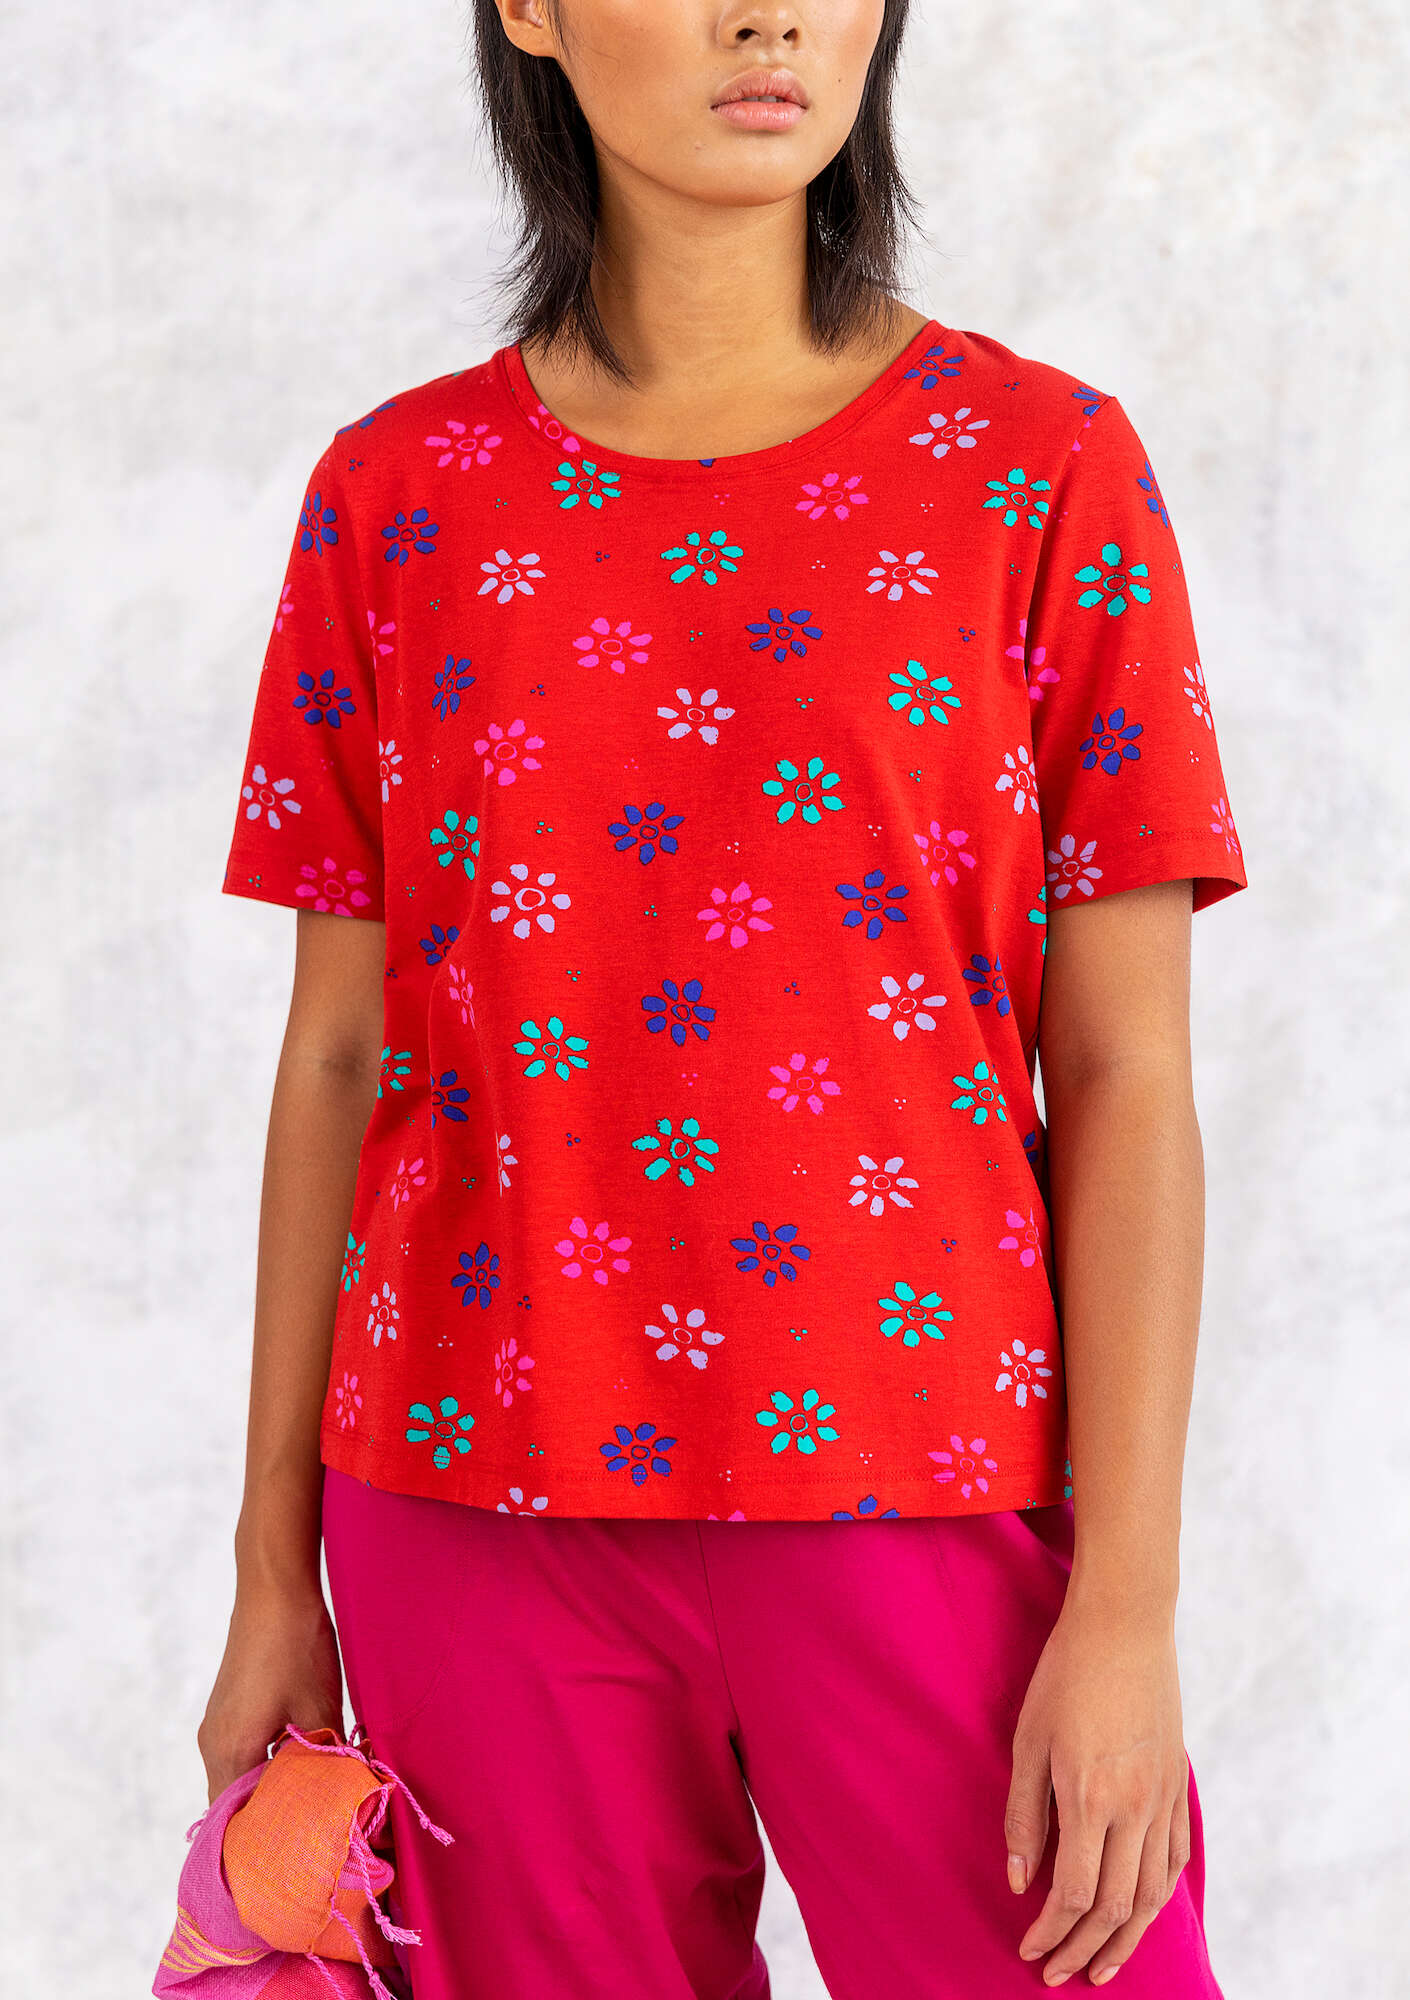 Ester T-shirt parrot red/patterned